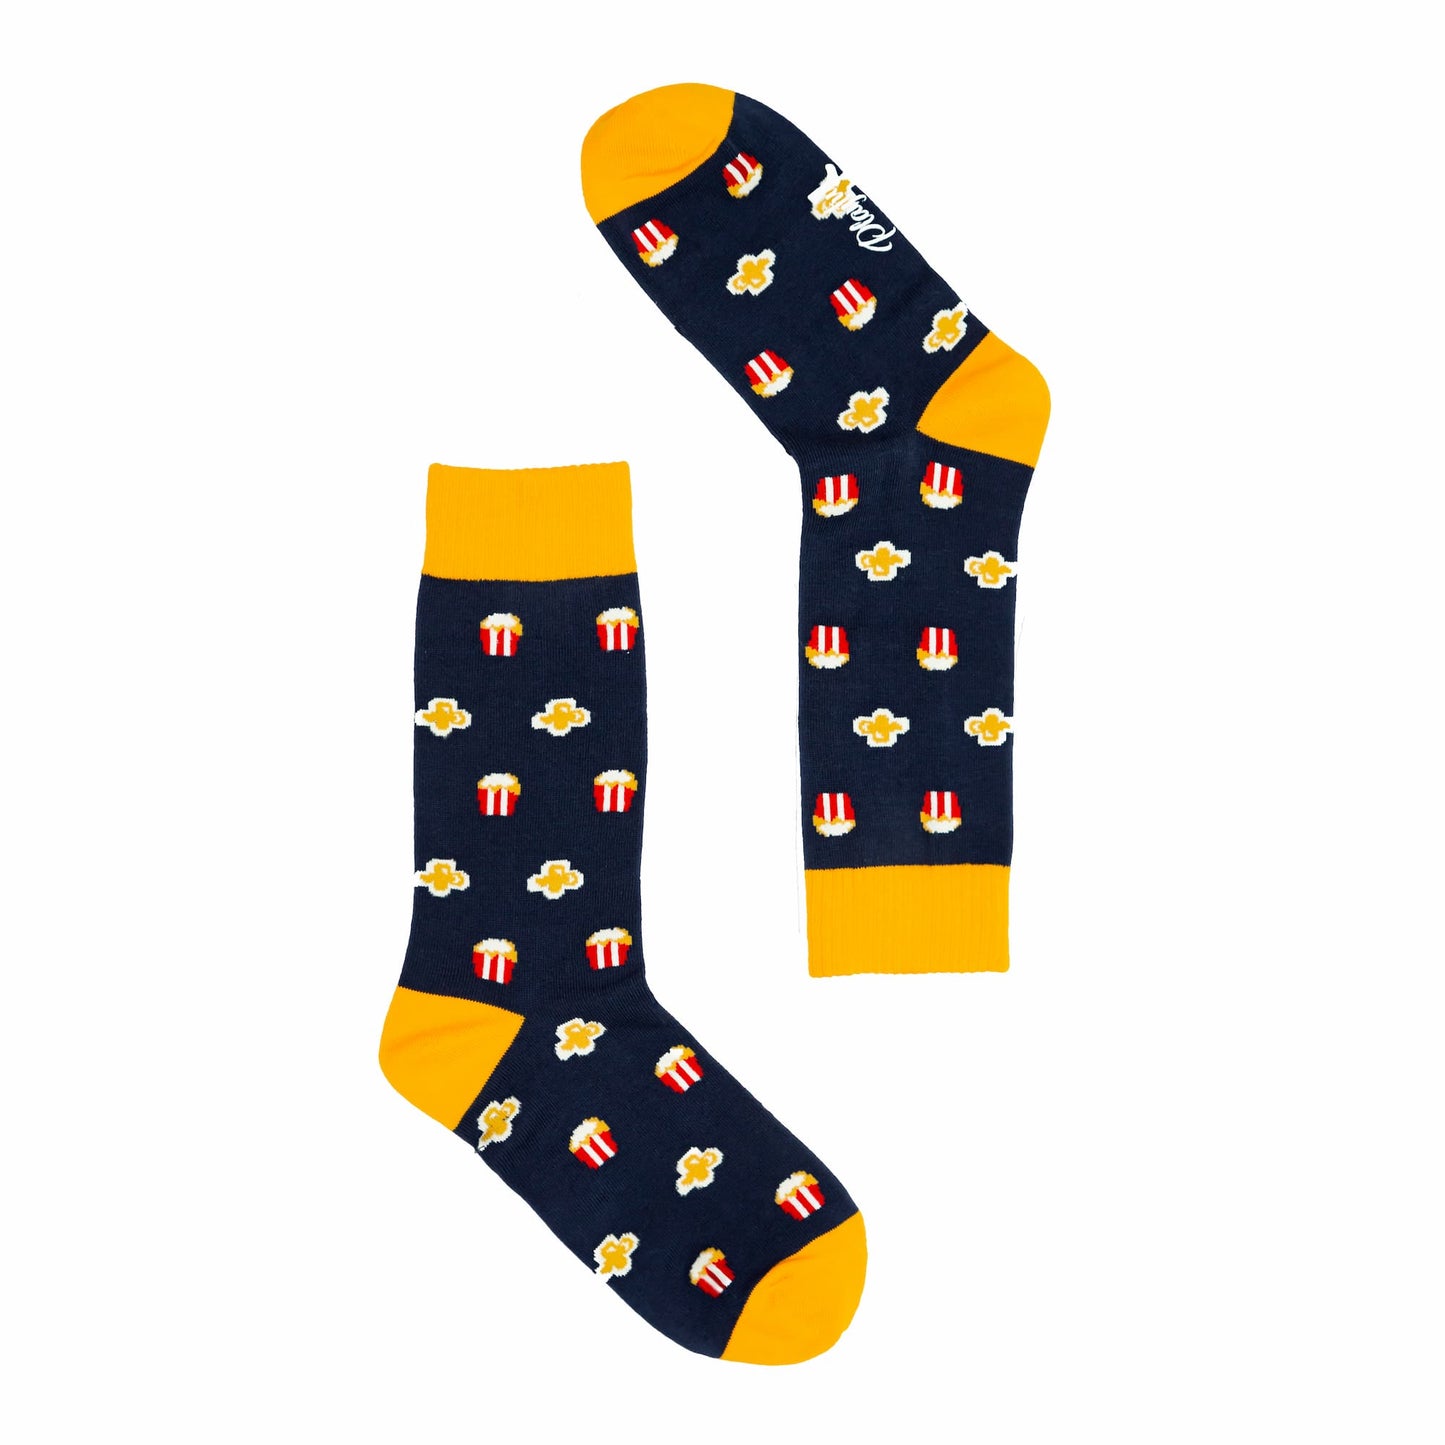 Popcorn Socks by Playful - BetterThanFlowers